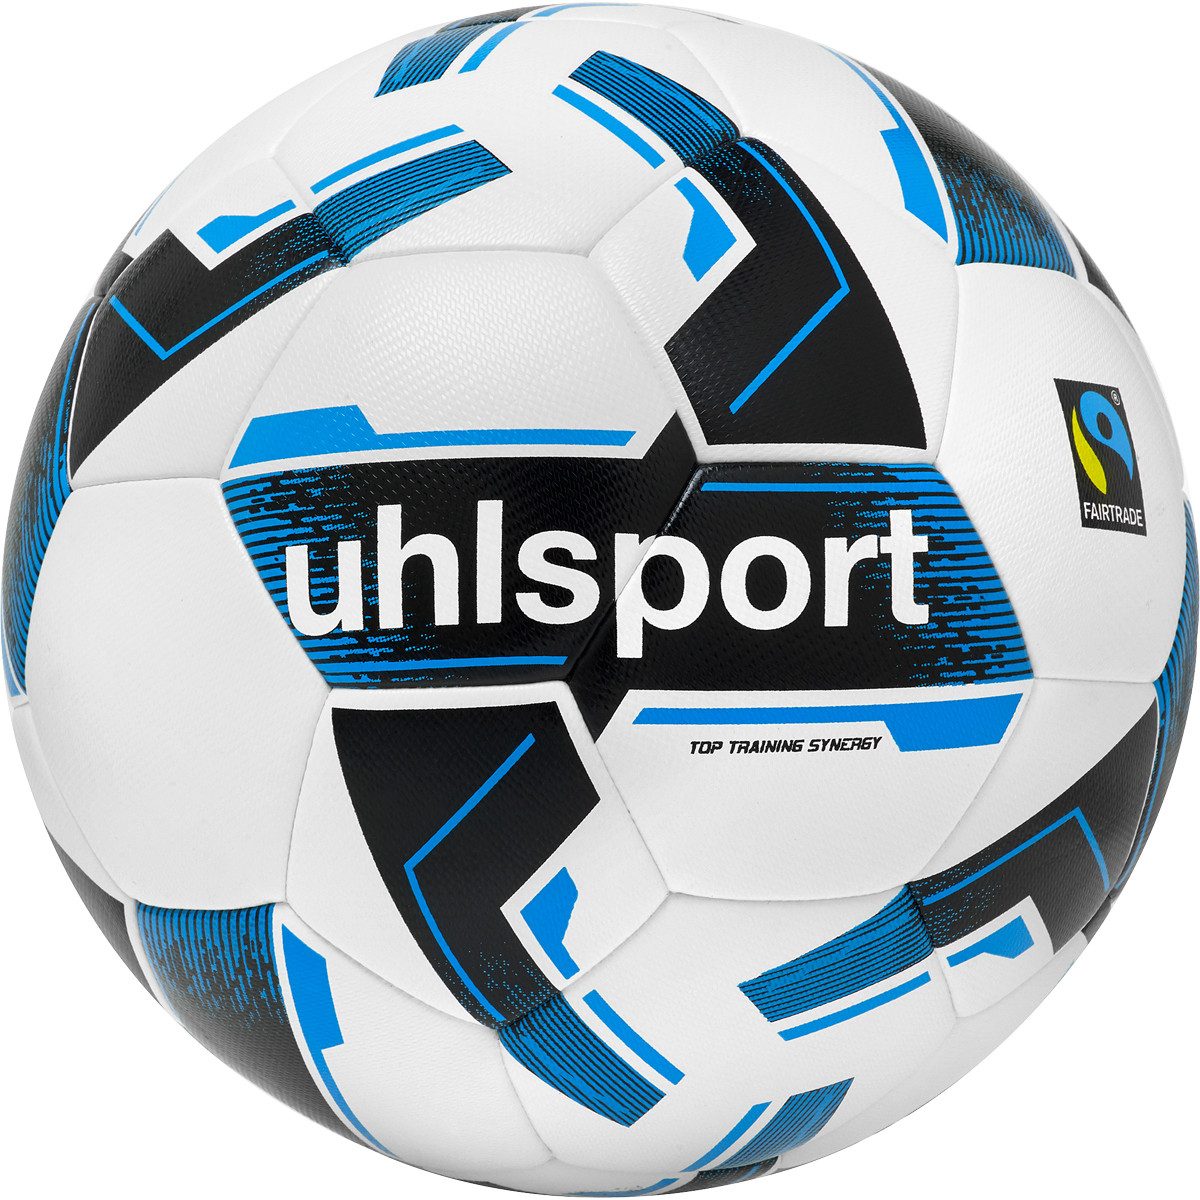 uhlsport Fußball Top Training Synergy Fairtrade